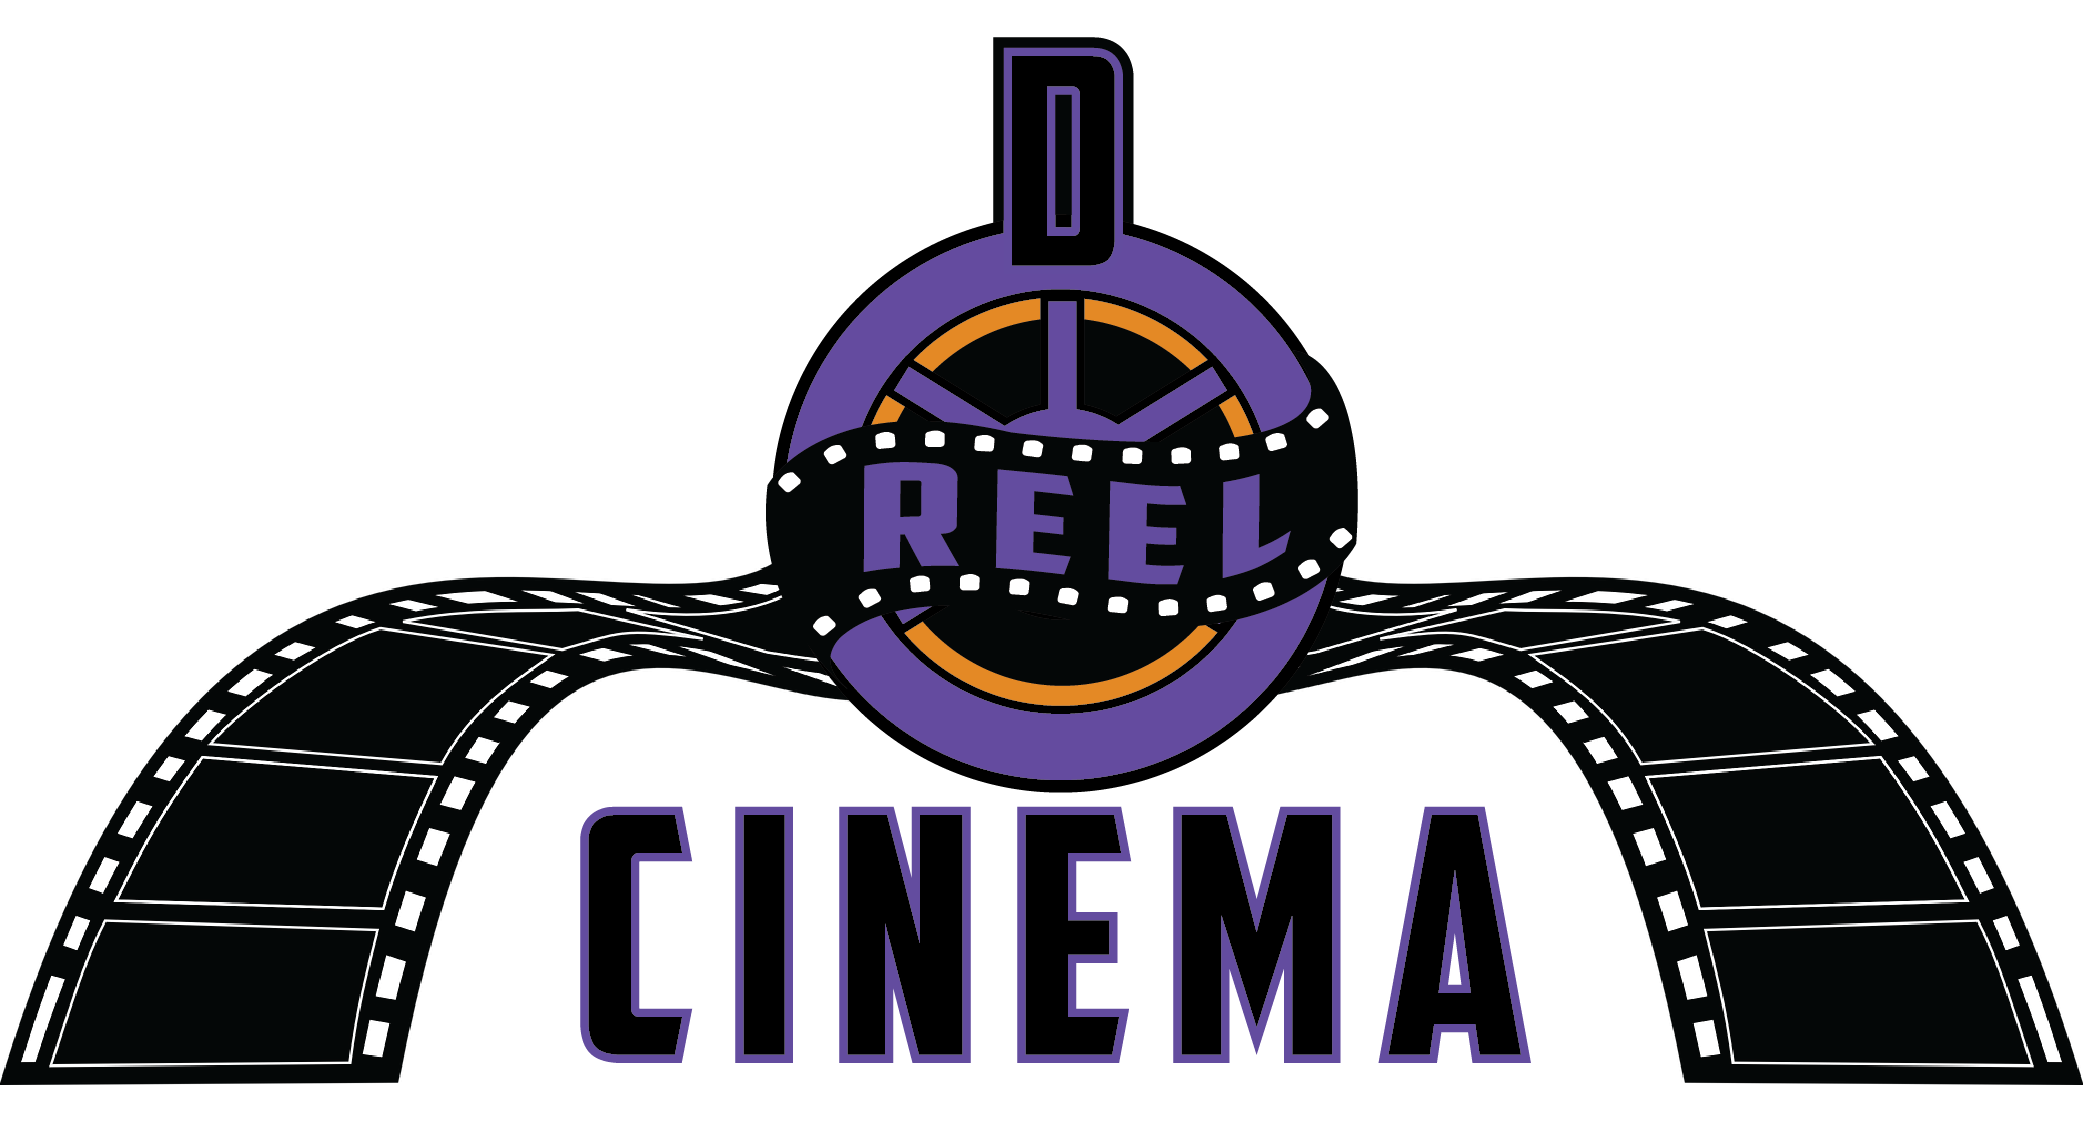 Логотип кинотеатра. Синема логотип.